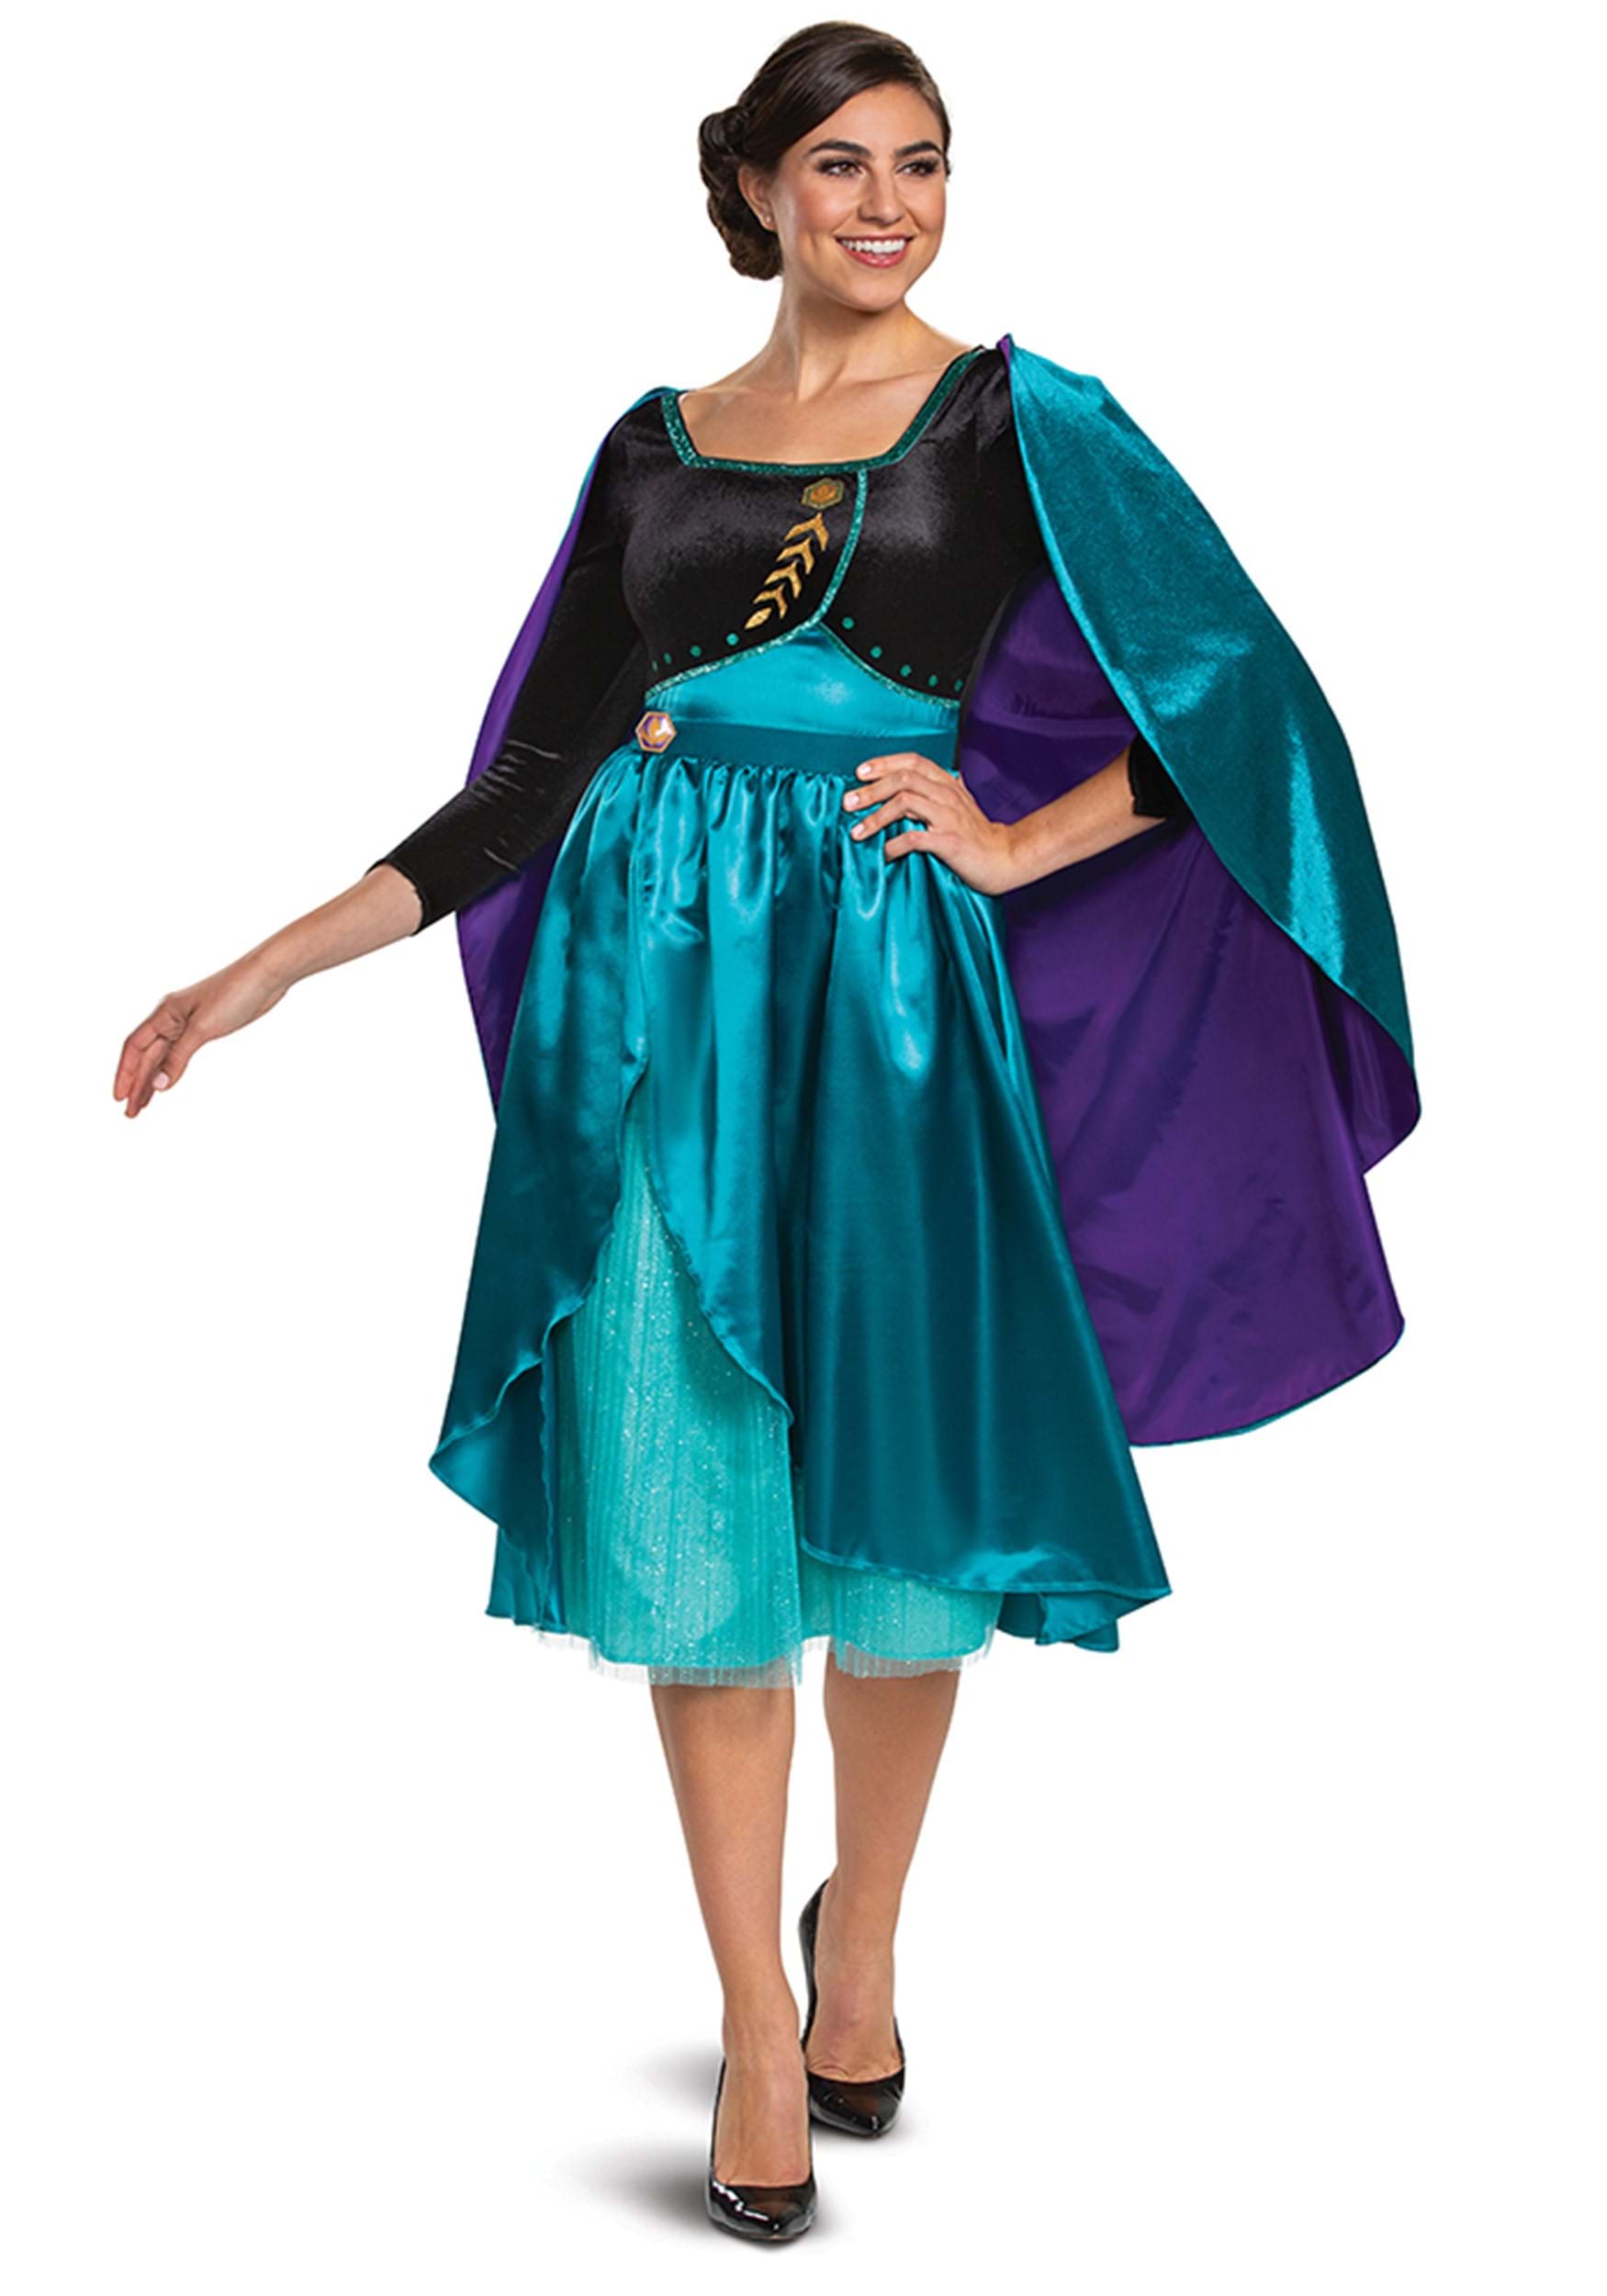 Photos - Fancy Dress Disguise Frozen Anna Deluxe Adult Costume Black/Green/Purple DI234